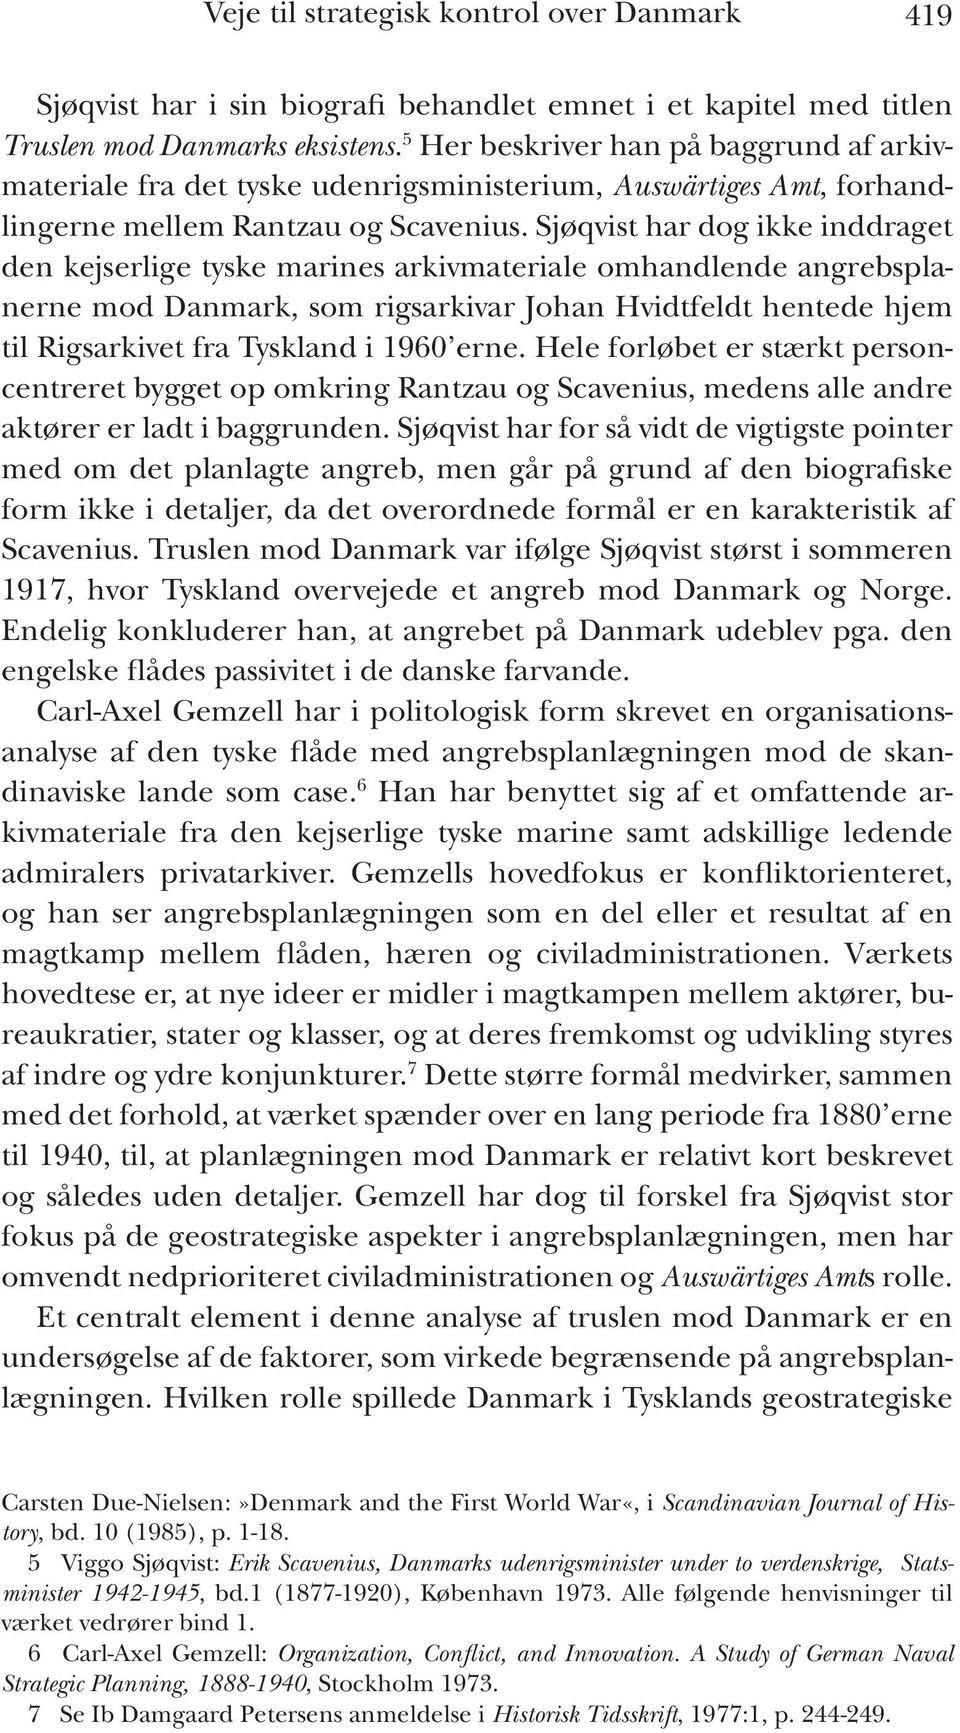 Sjøqvist har dog ikke inddraget den kejserlige tyske marines arkivmateriale omhandlende angrebsplanerne mod Danmark, som rigsarkivar Johan Hvidtfeldt hentede hjem til Rigsarkivet fra Tyskland i 1960